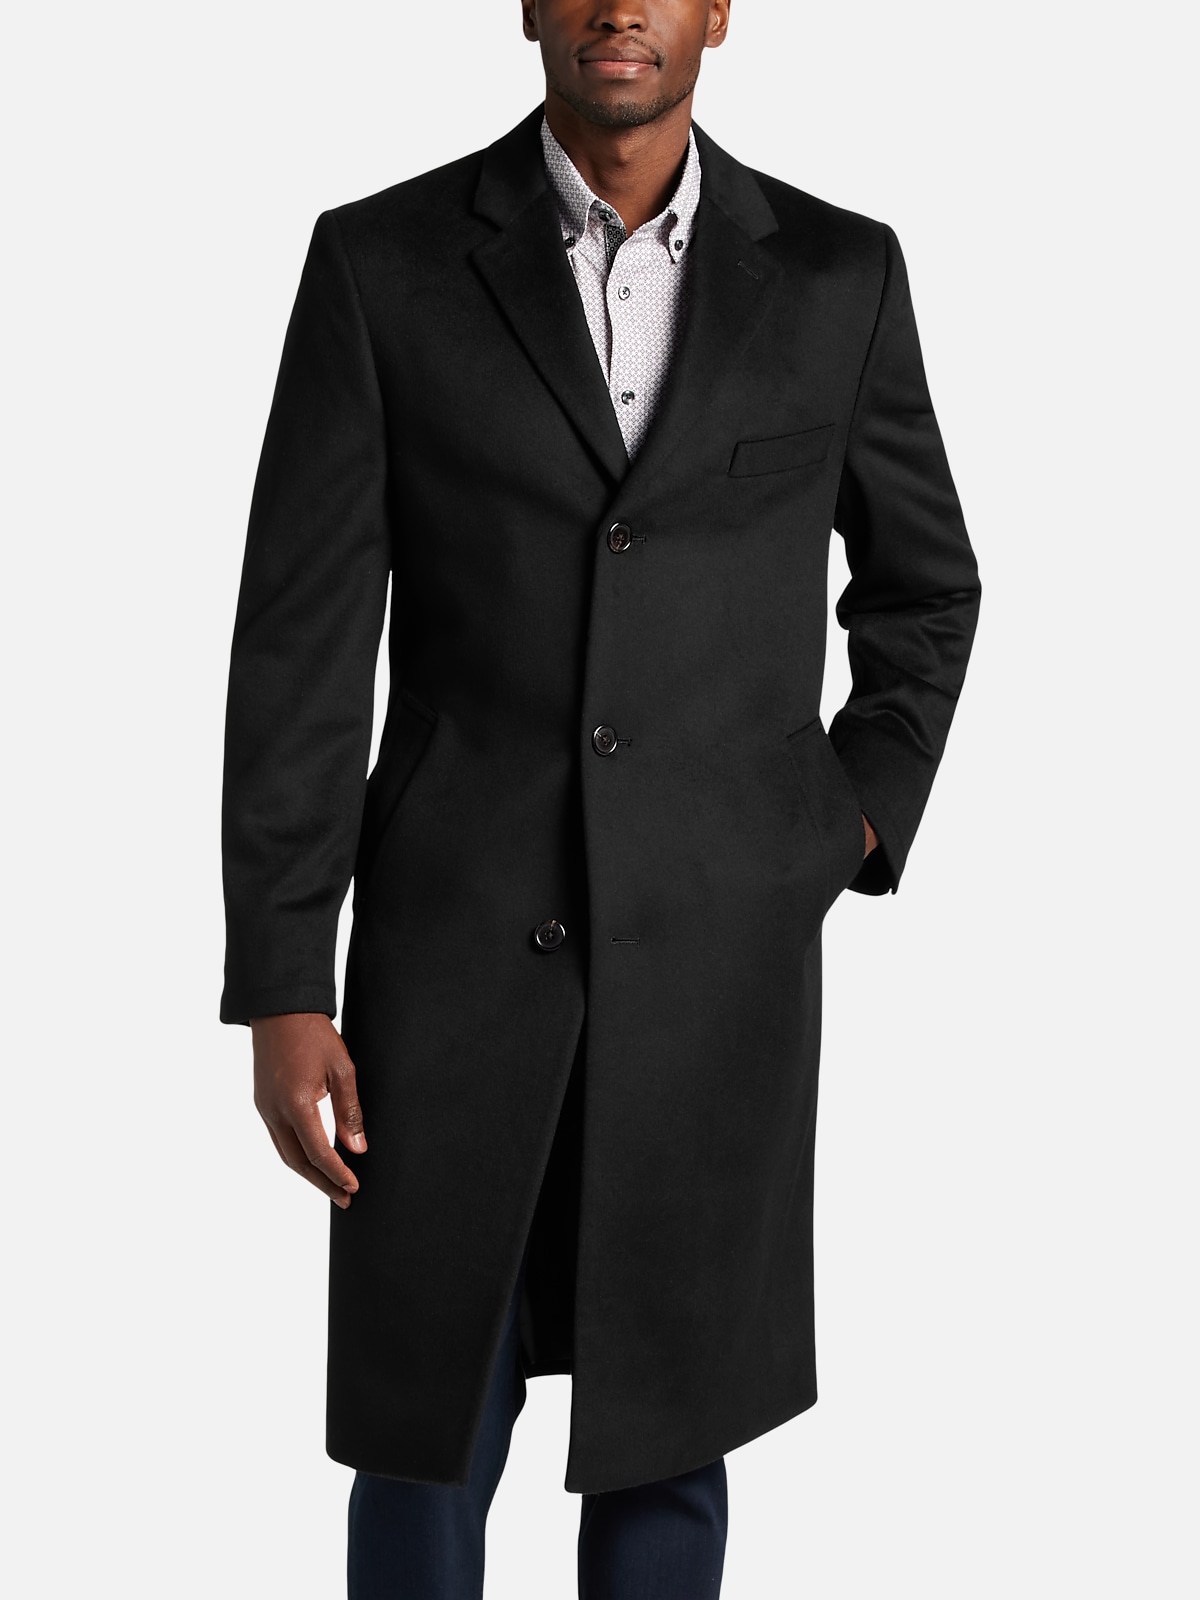 Michael Kors Classic Fit Top Coat | All Sale| Men's Wearhouse